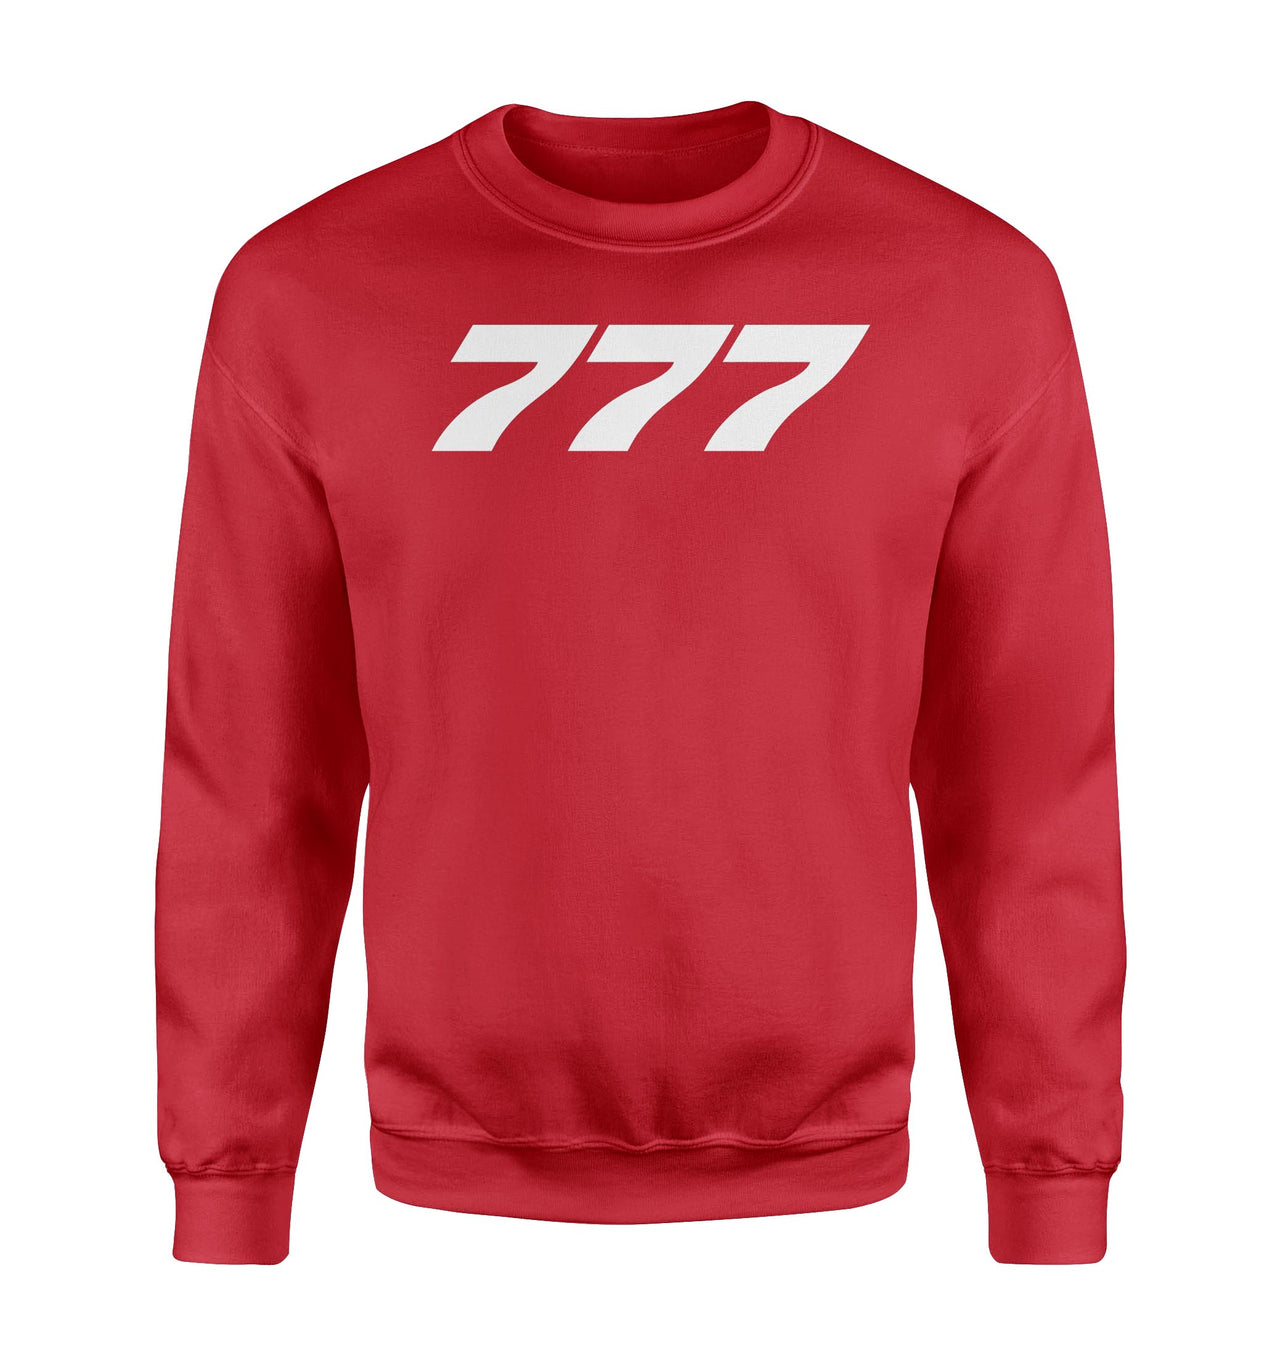 777 Flat Text Designed Sweatshirts